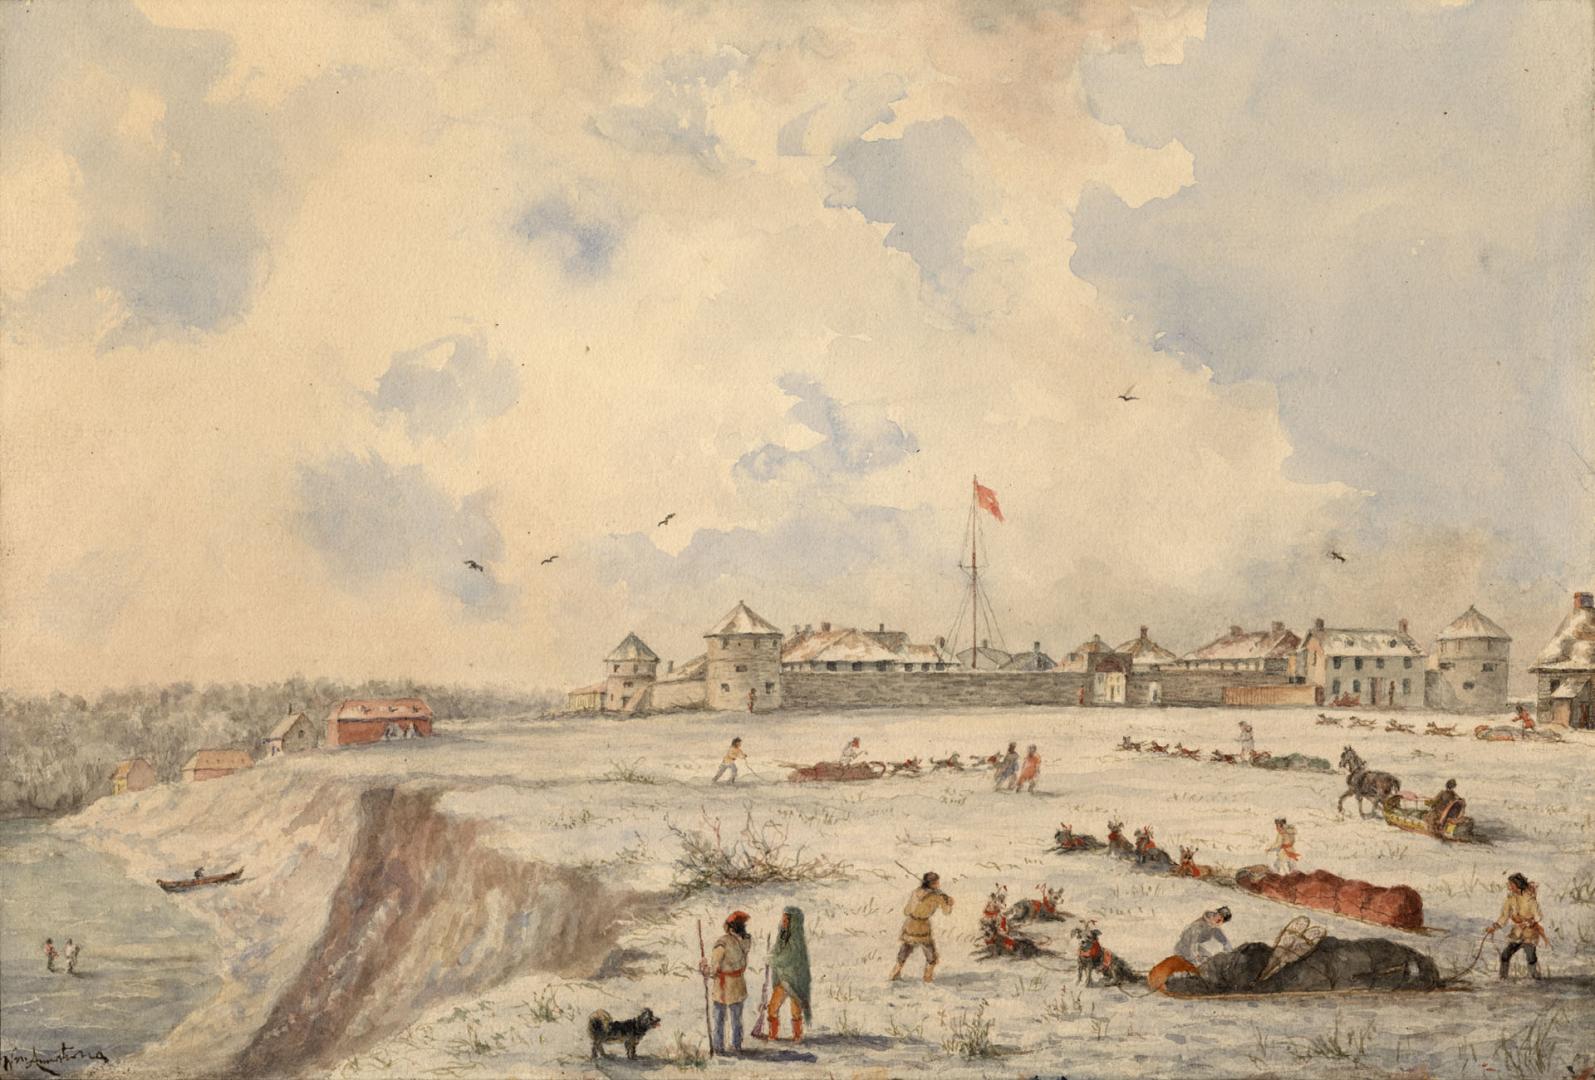 Fort Garry (Manitoba) 1857-1858